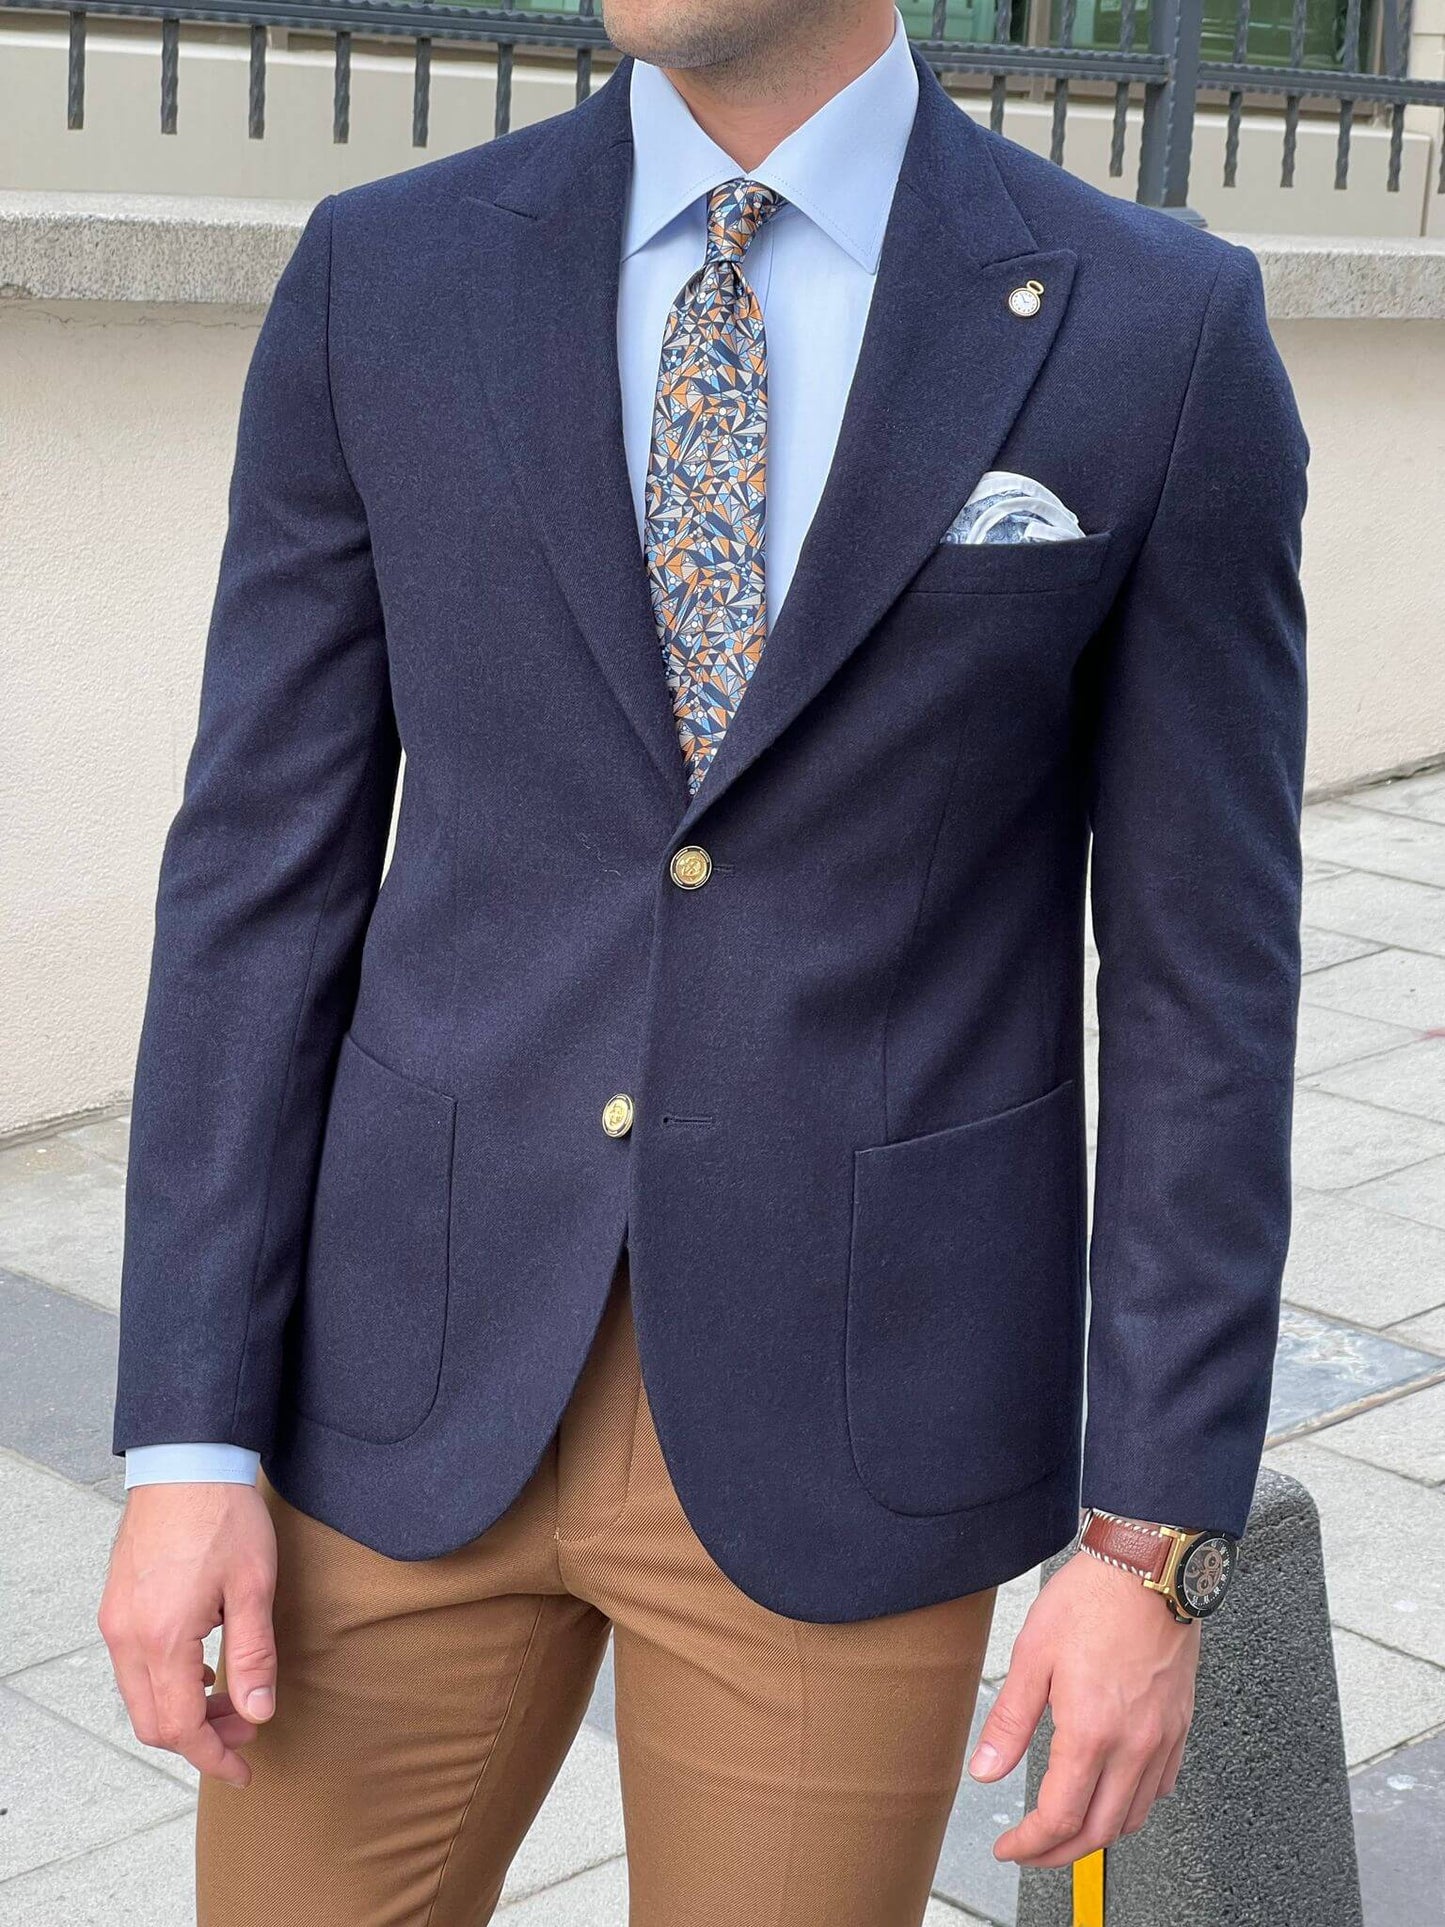 Dapper and distinguished: our male model effortlessly rocks a navy blue jacket, defining contemporary elegance.